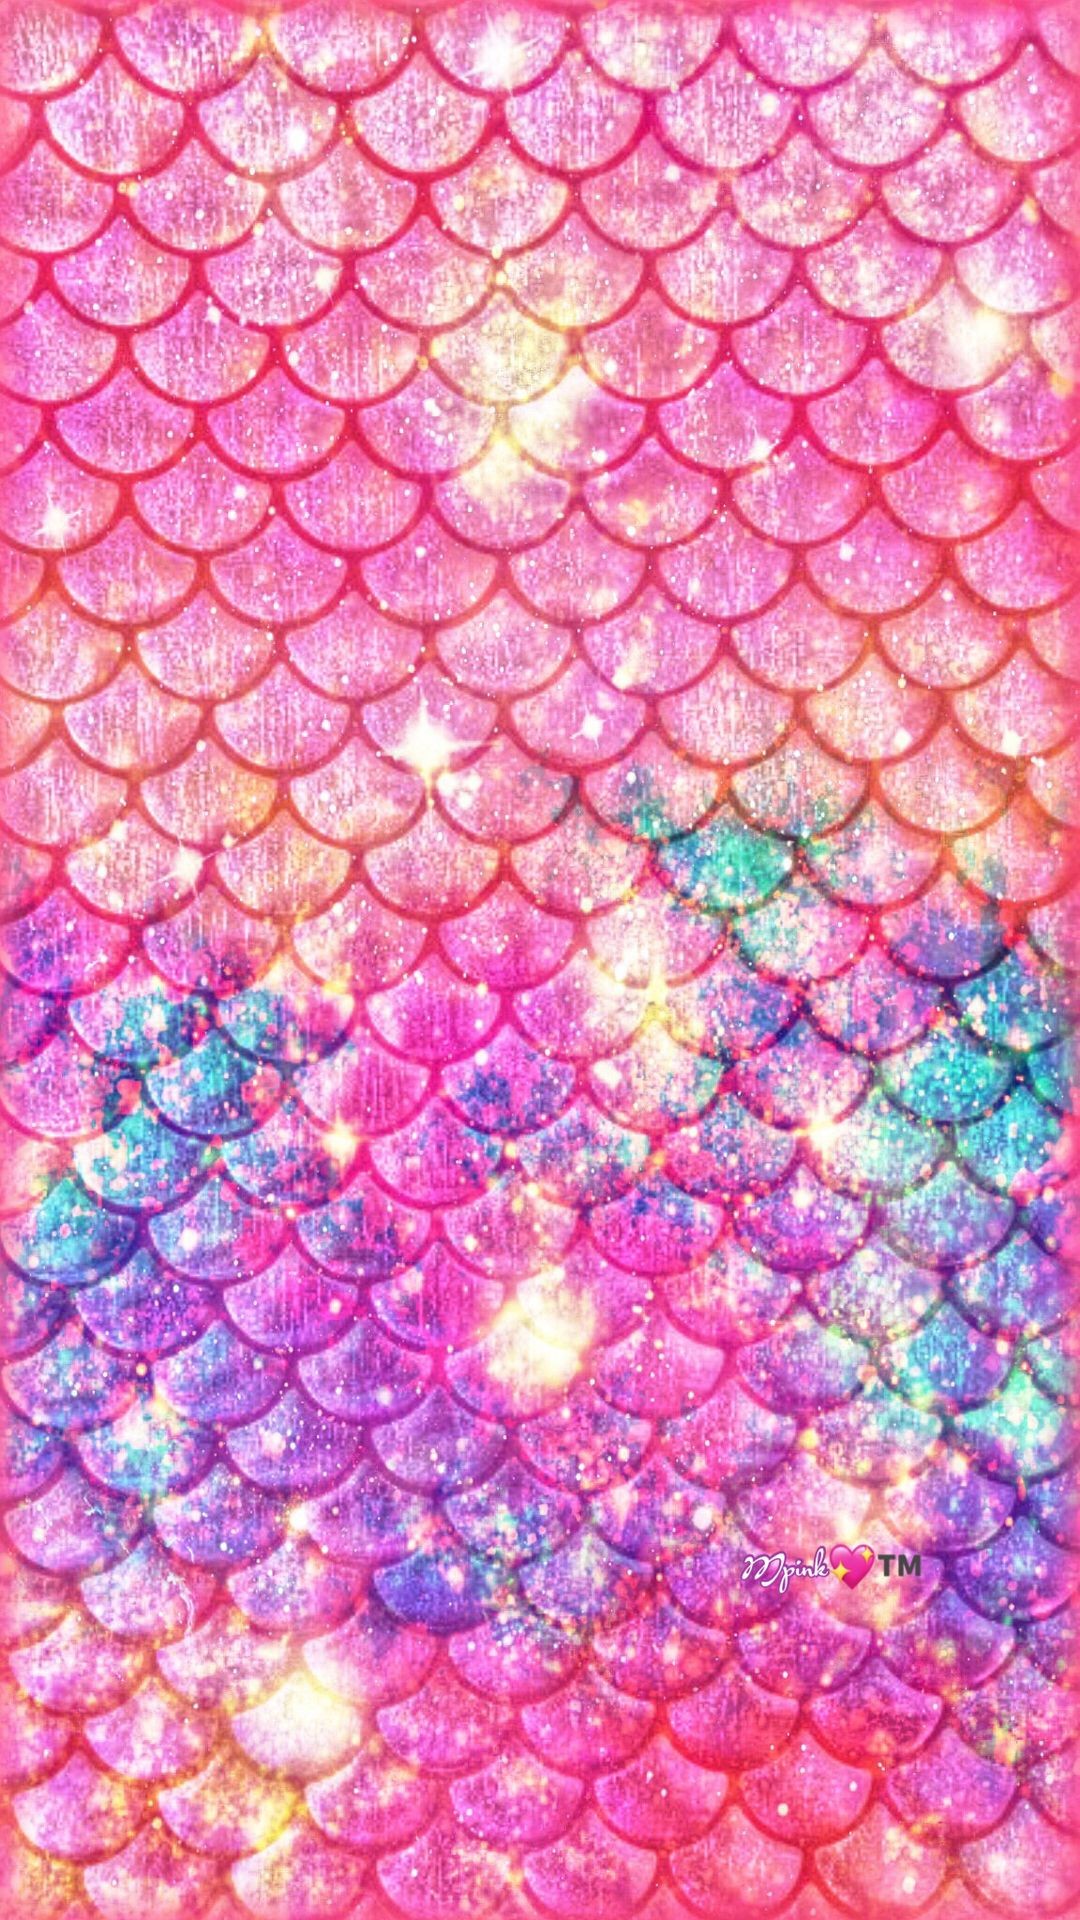 1080x1920 Colorful Mermaid Galaxy Wallpaper #androidwallpaper #iphonewallpaper # wallpaper #galaxy #sparkle #glitter #lockscreen #pretty #pink #cute  #pattern #girly ...